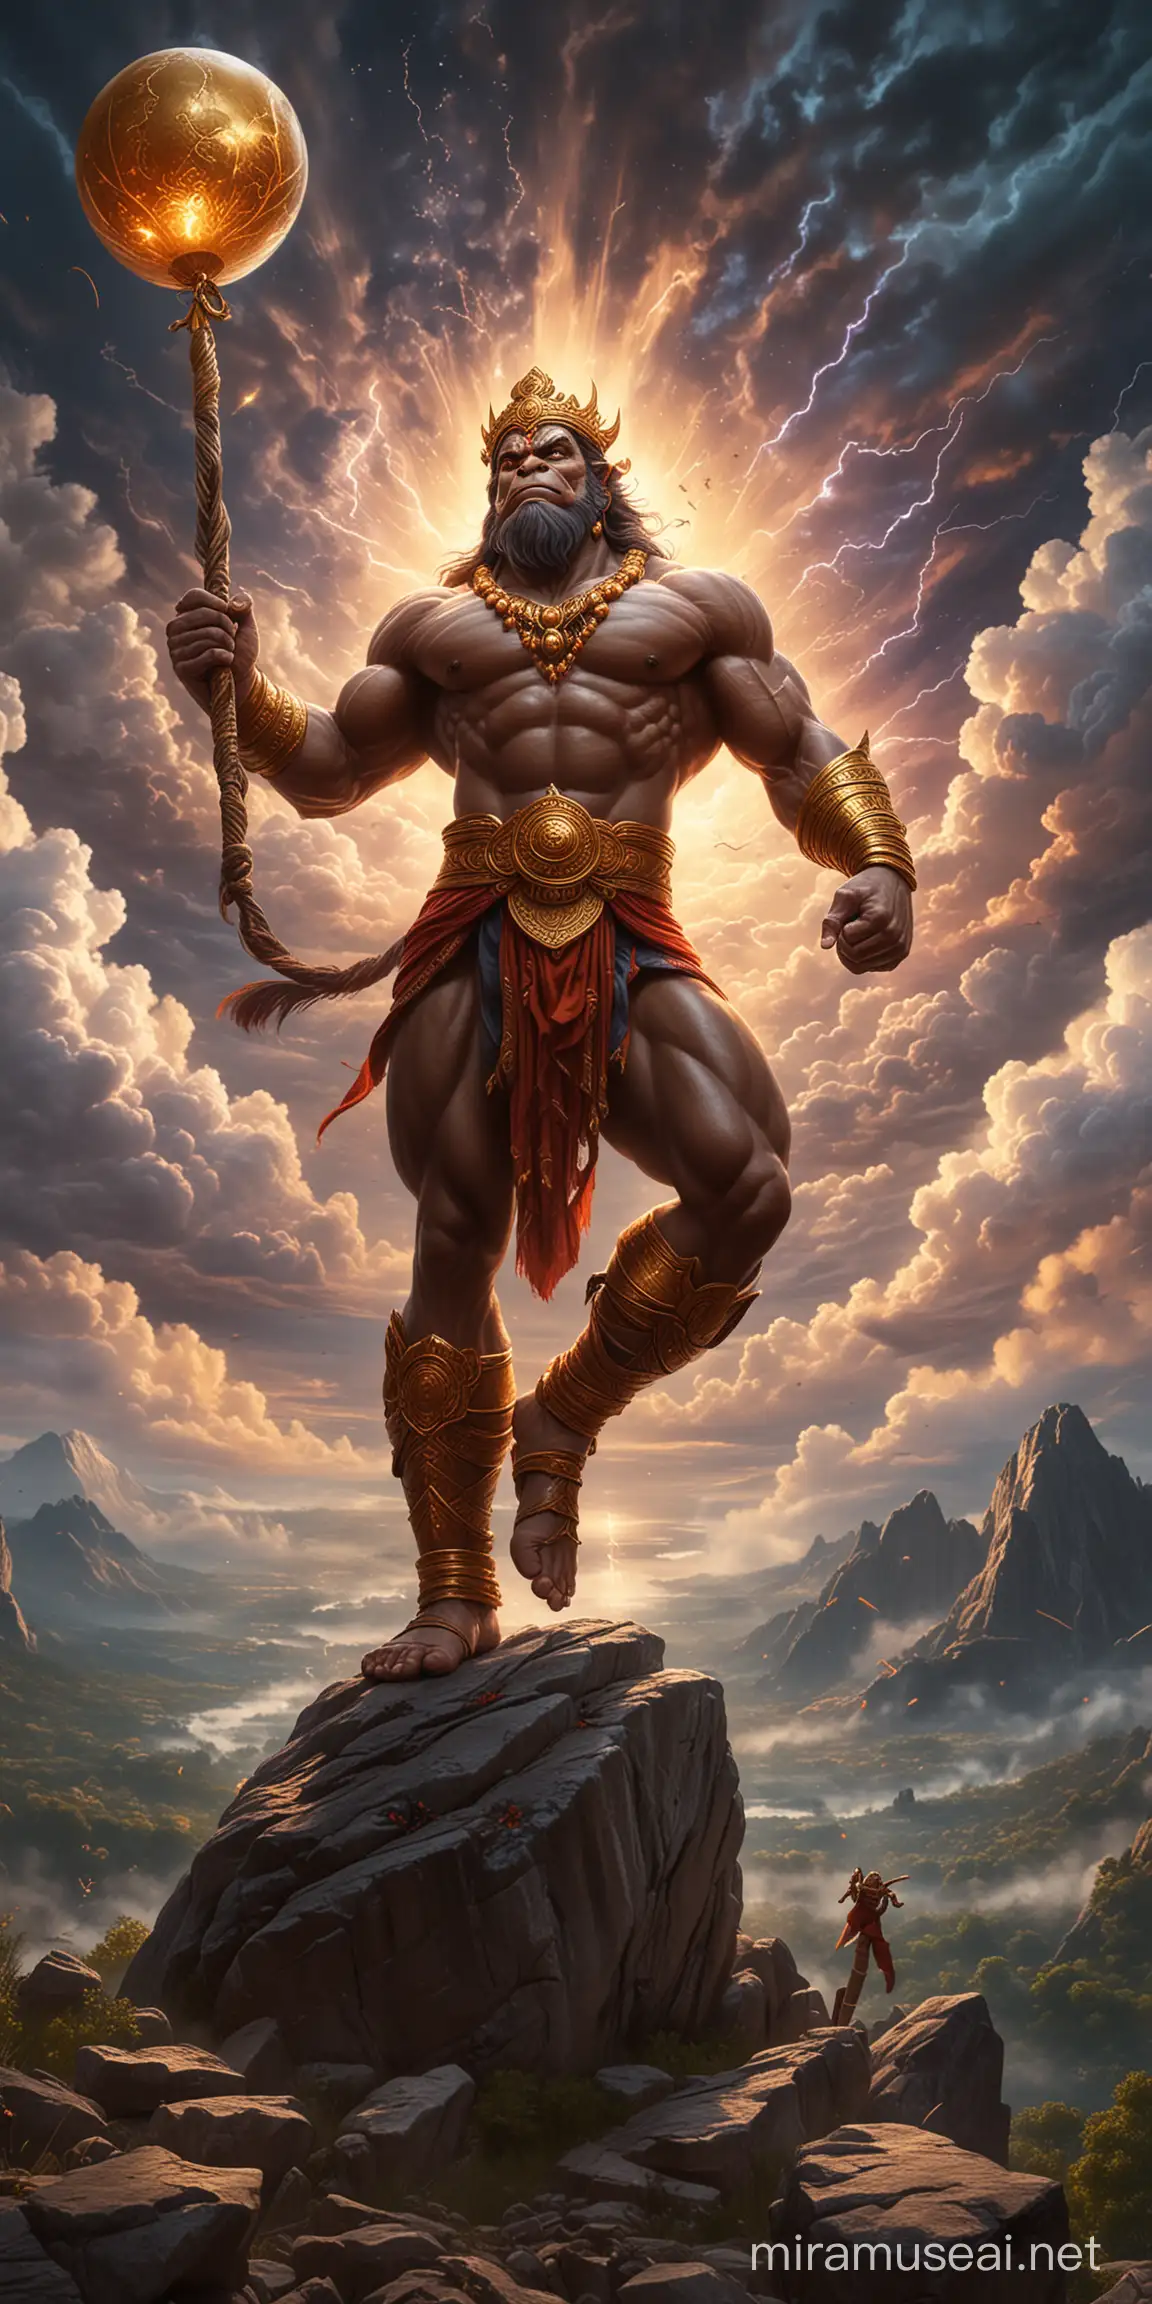 Muscular God Hanuman Holding Golden Hammer on Hilltop Battlefield